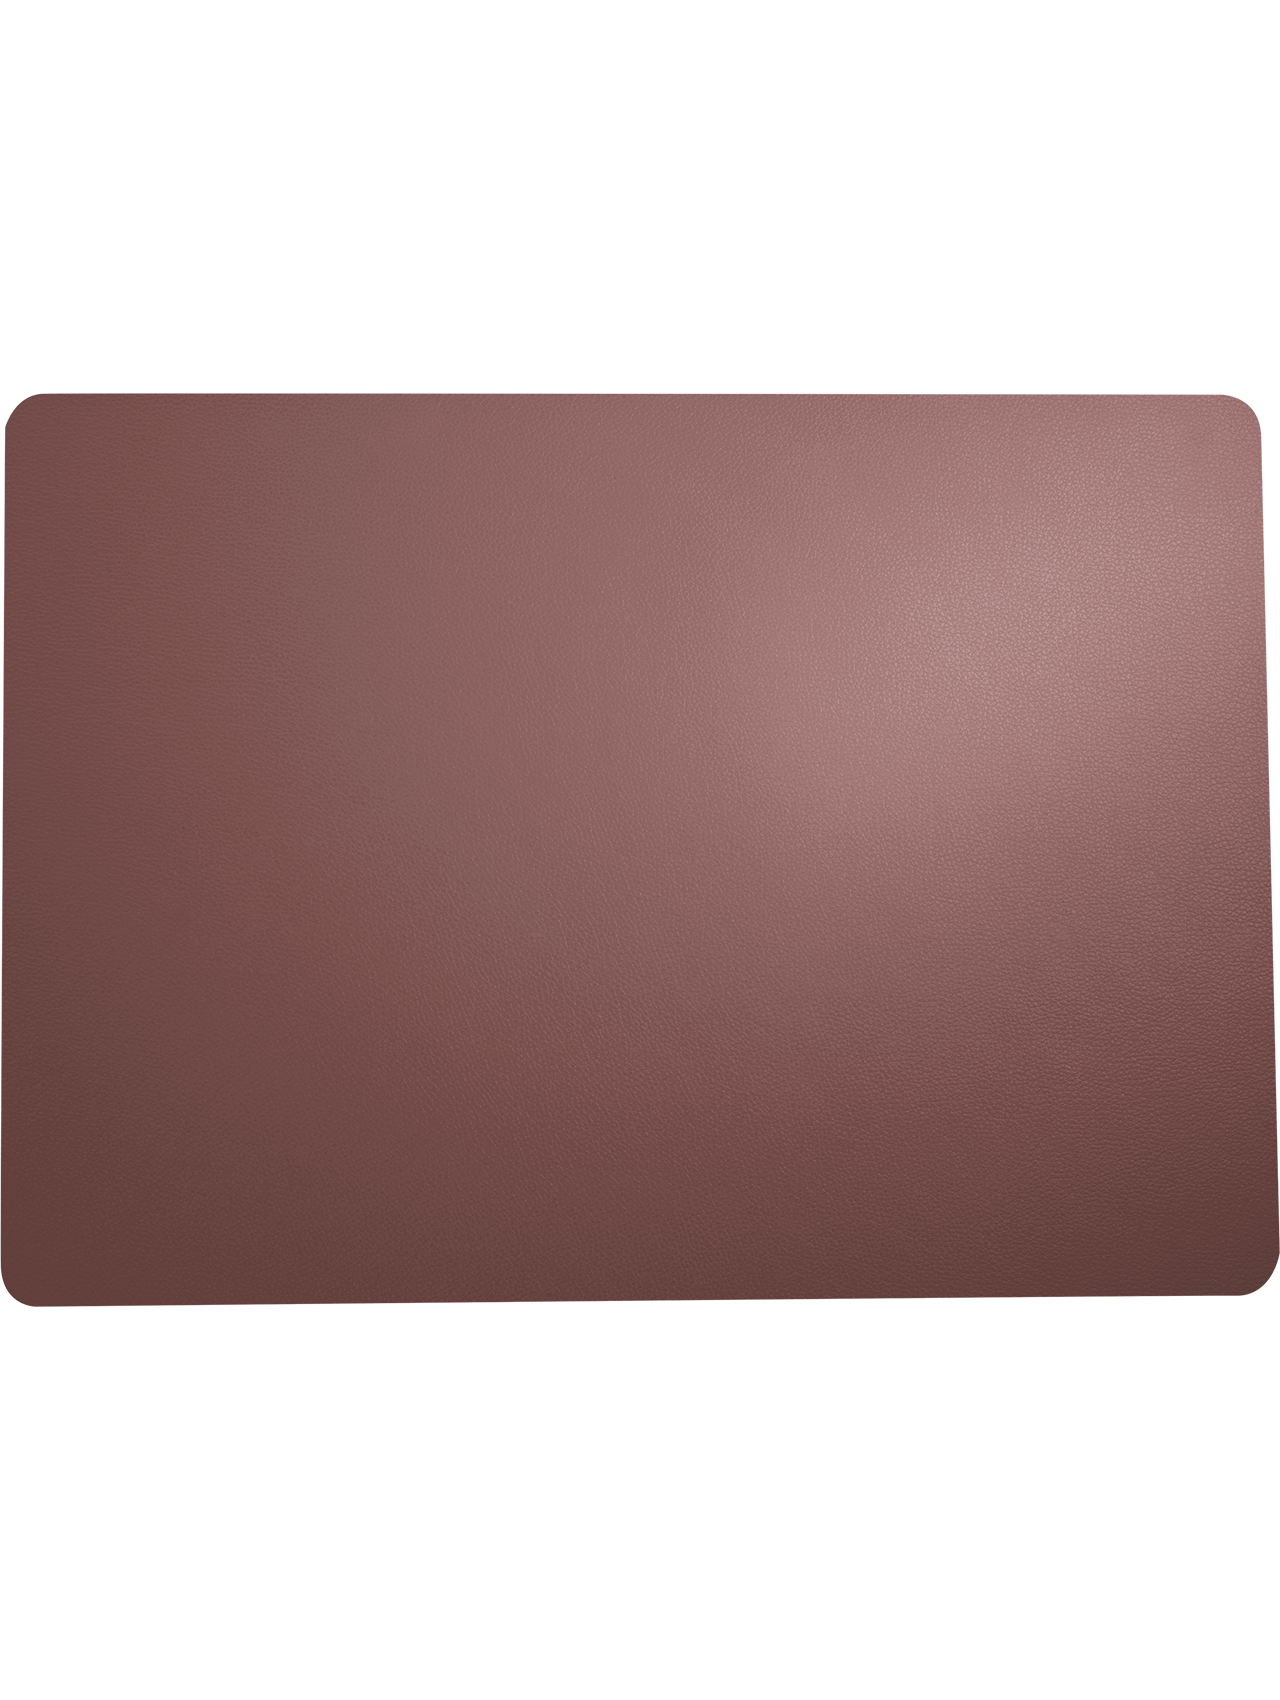 ASA leather optic Tischset eckig plum 46 x 33 cm PU